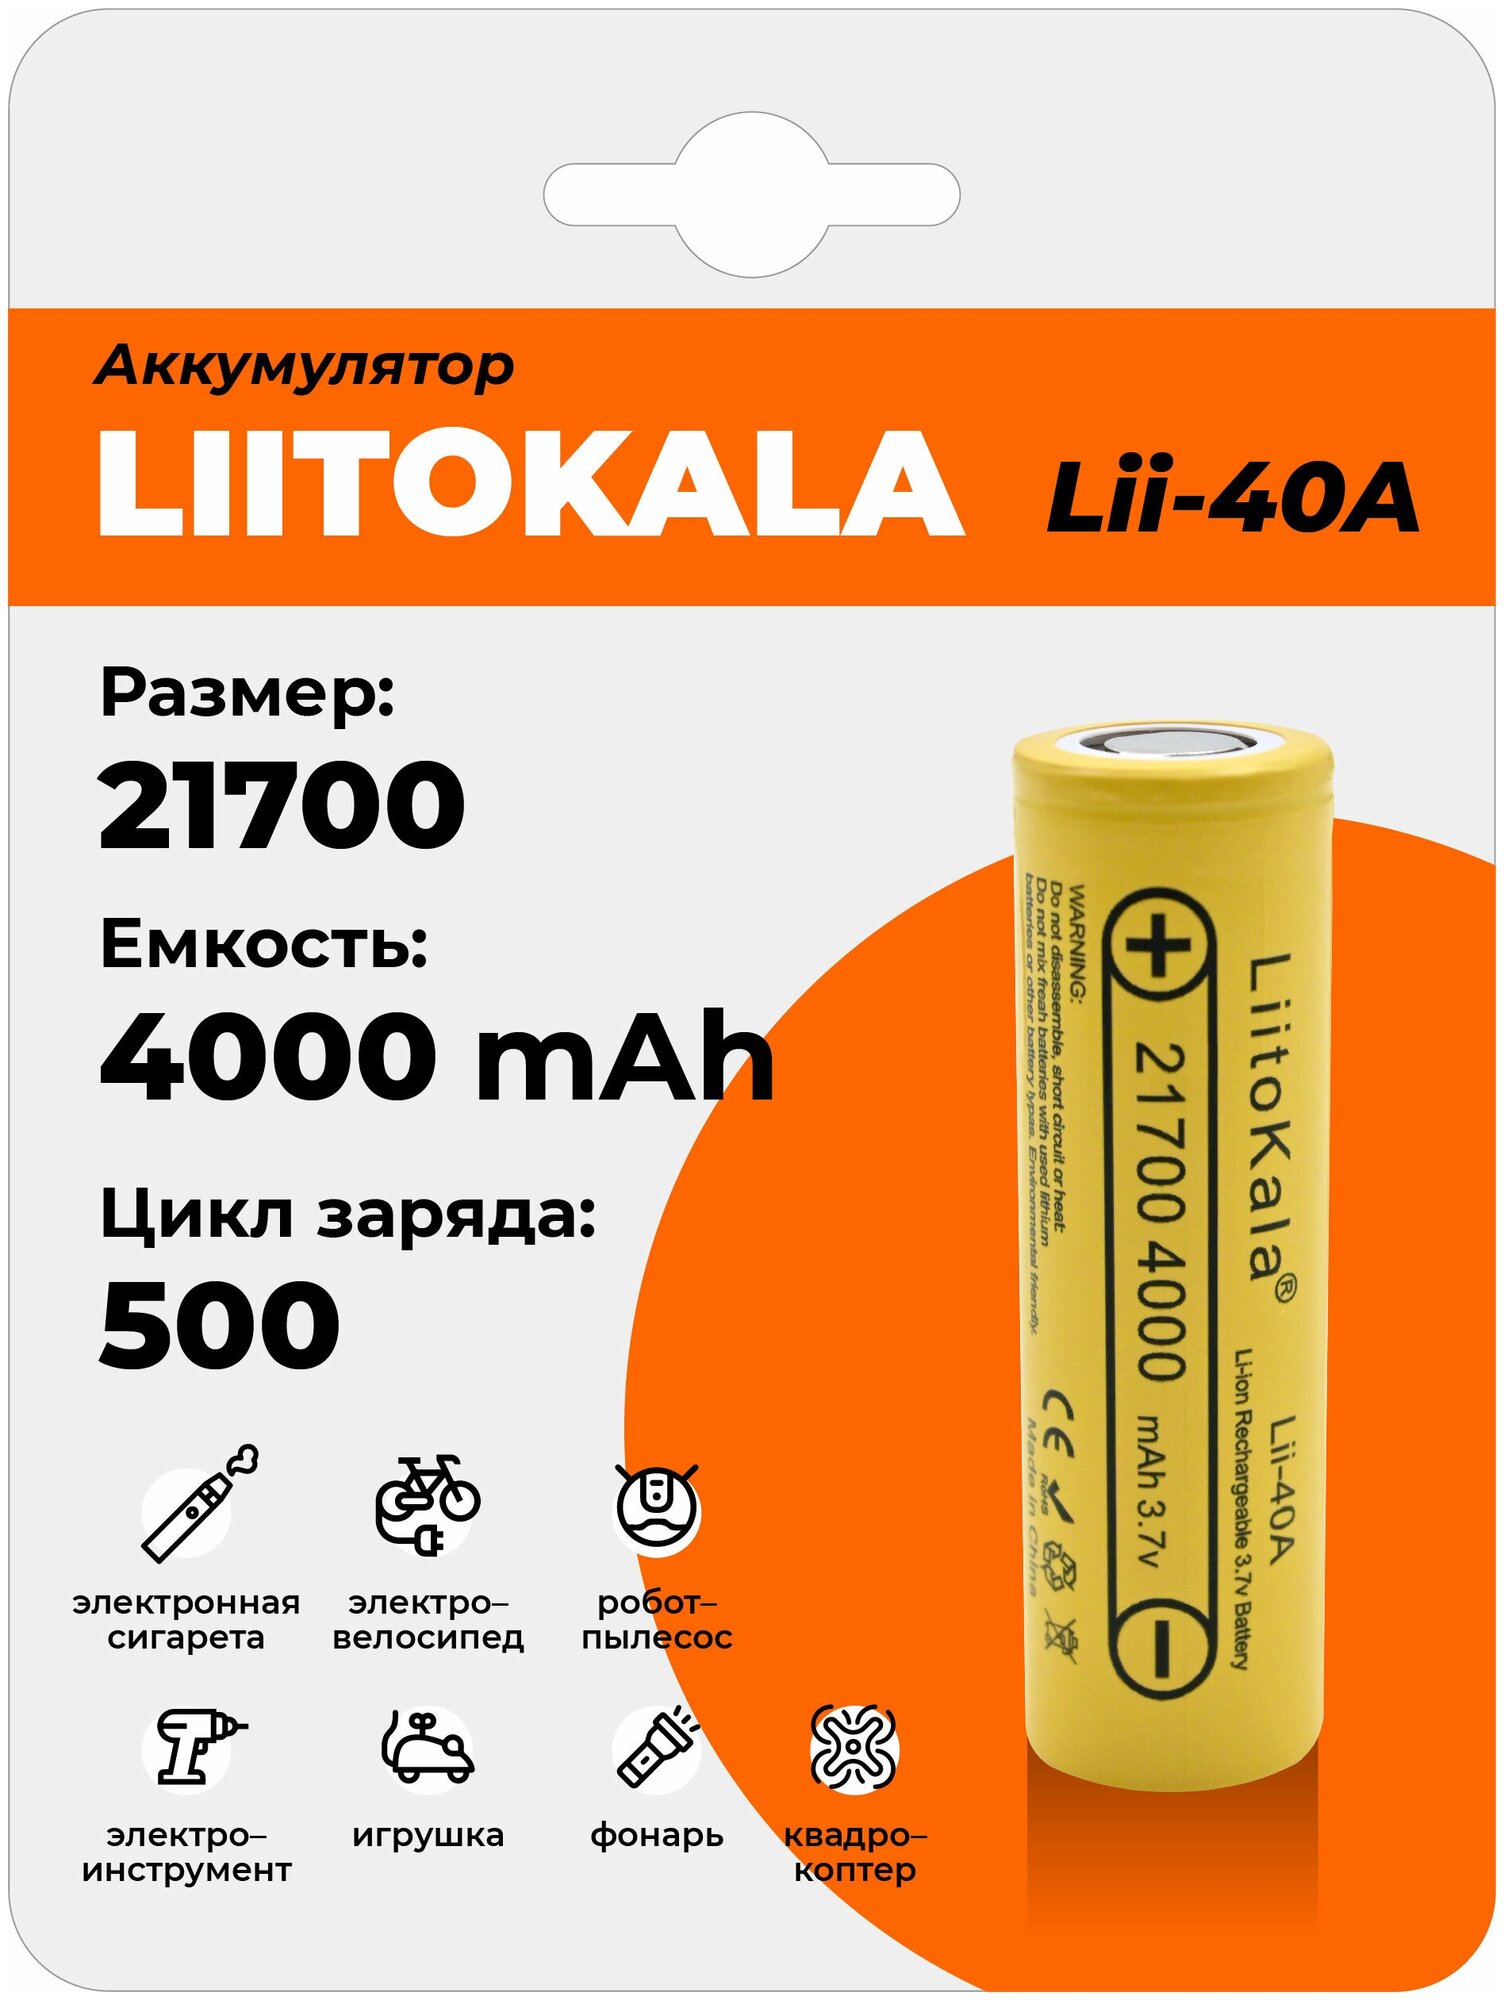 Аккумулятор LiitoKala Lii-40A 21700 4000 mAh, универсальная Li-Ion батарейка, литий-ионный аккумулятор